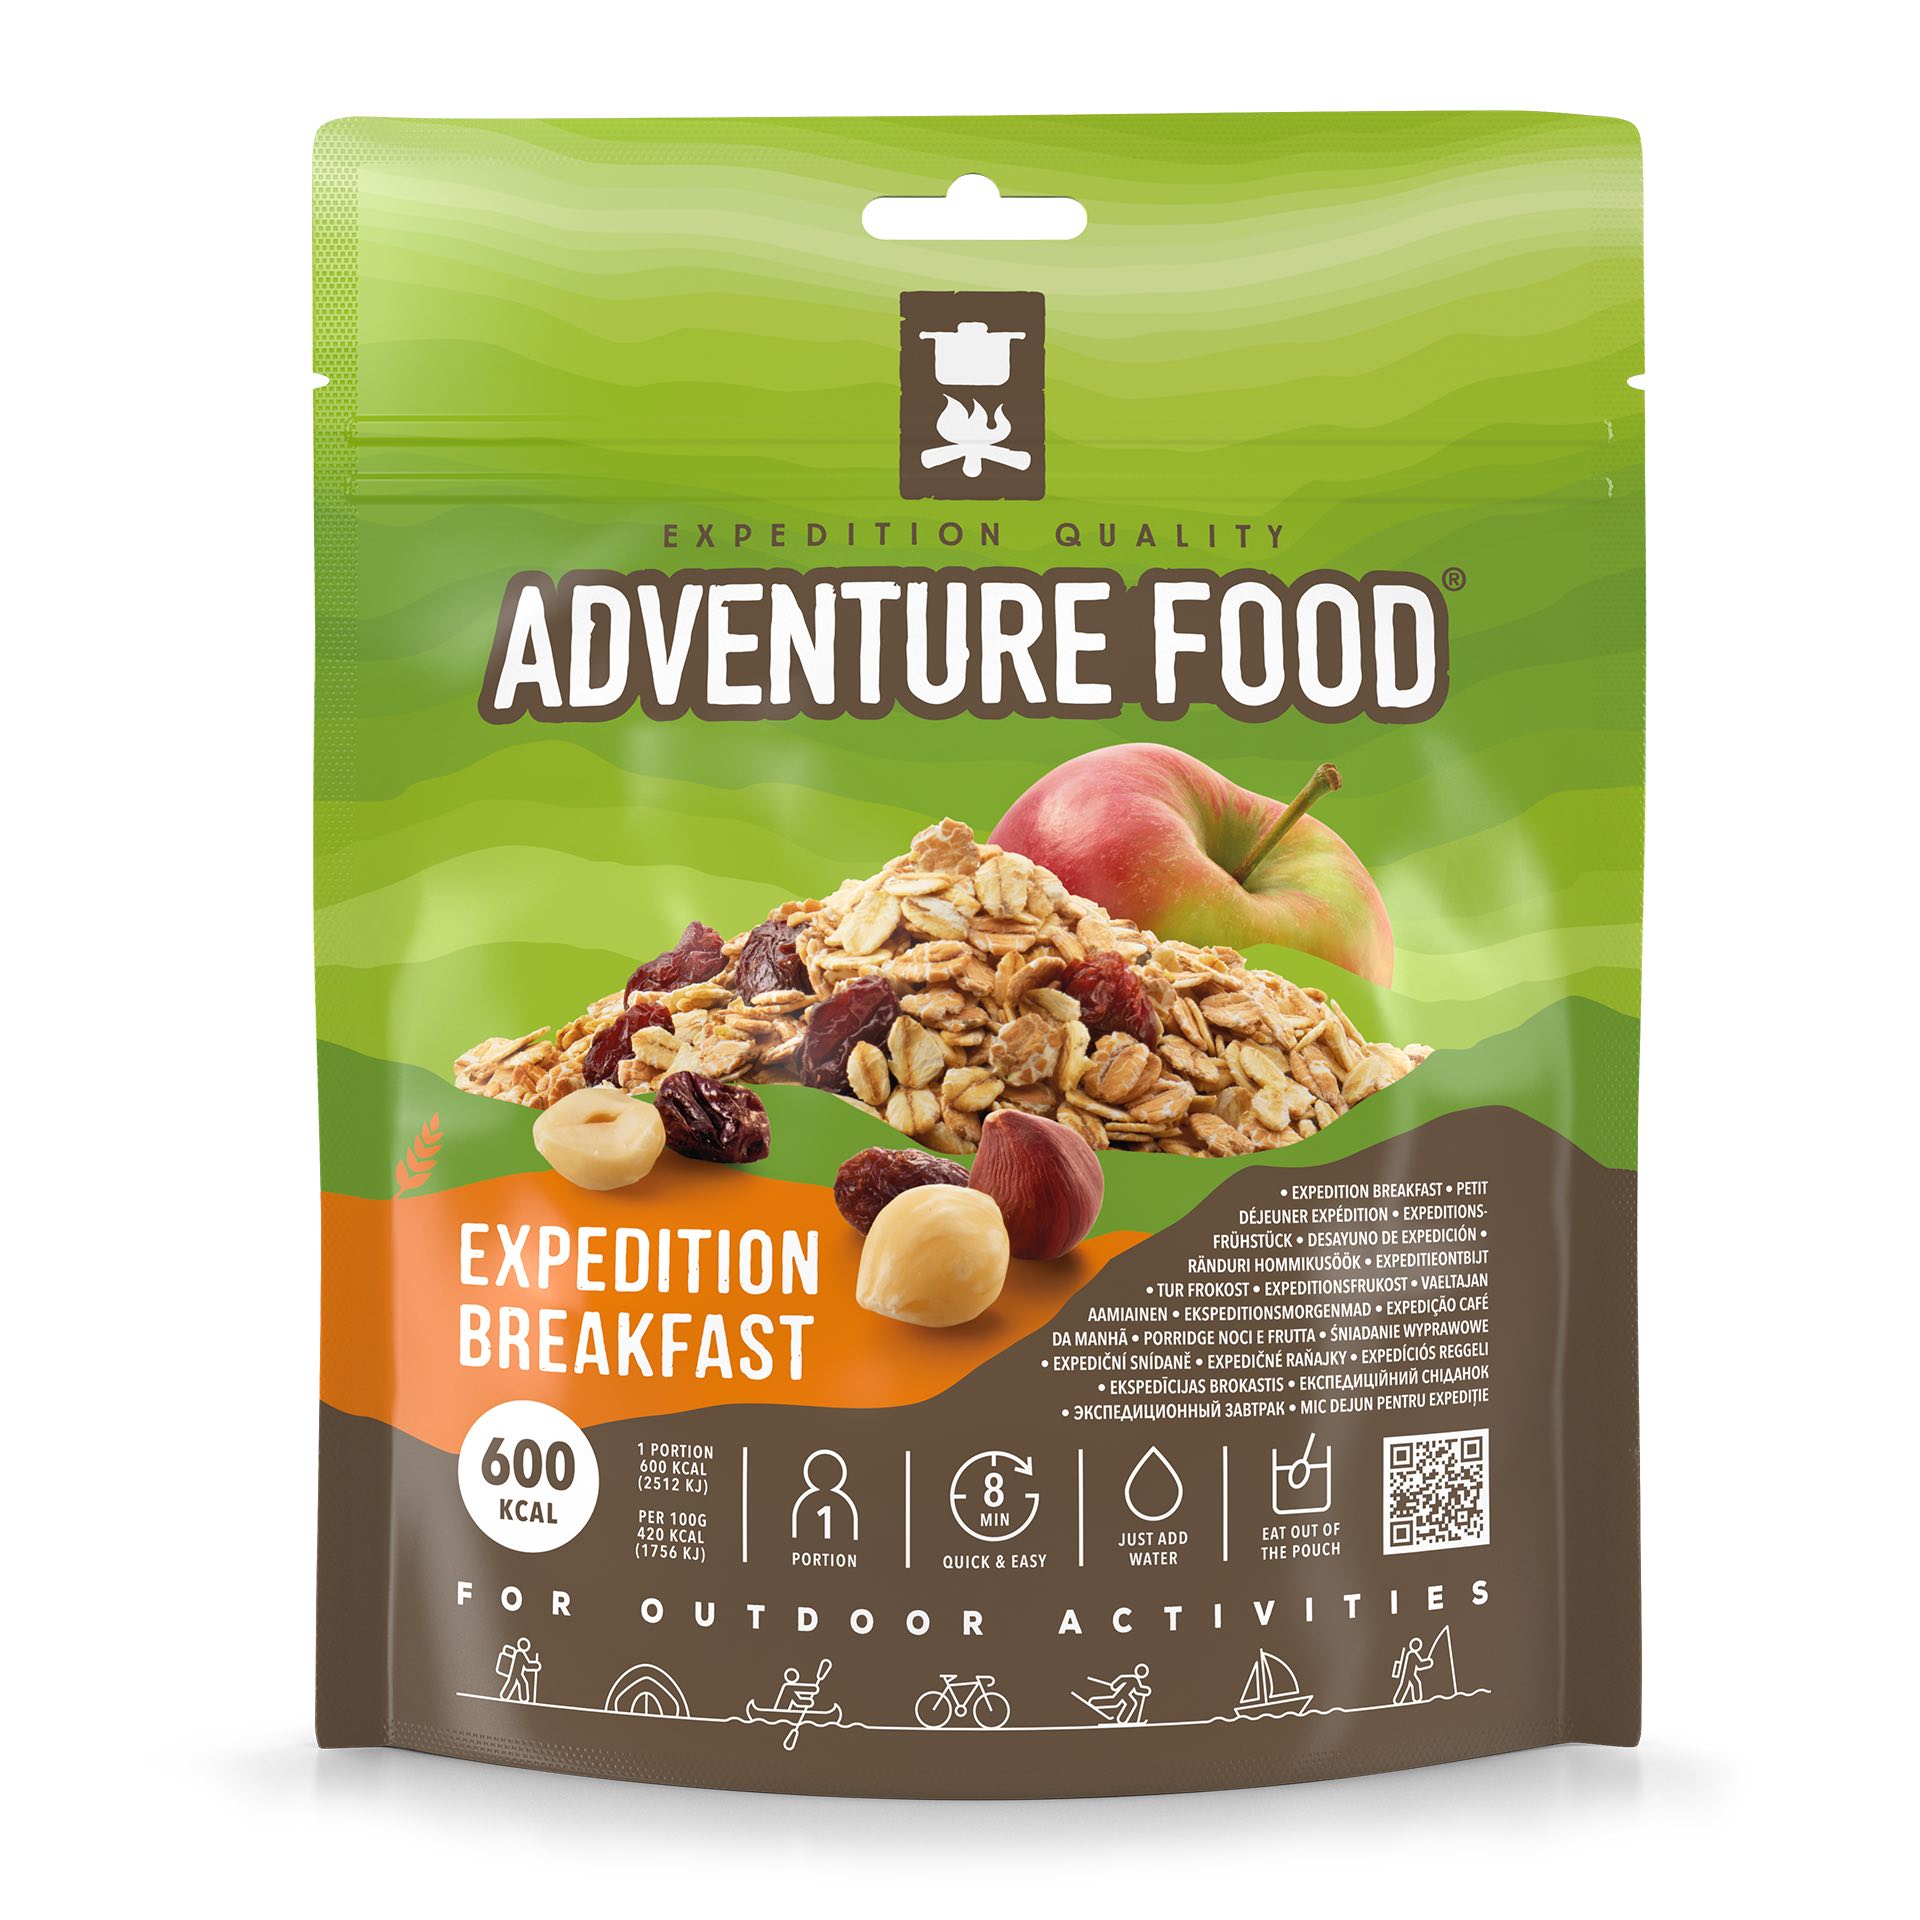 Adventure Food Expedition Breakfast (18-pack) 